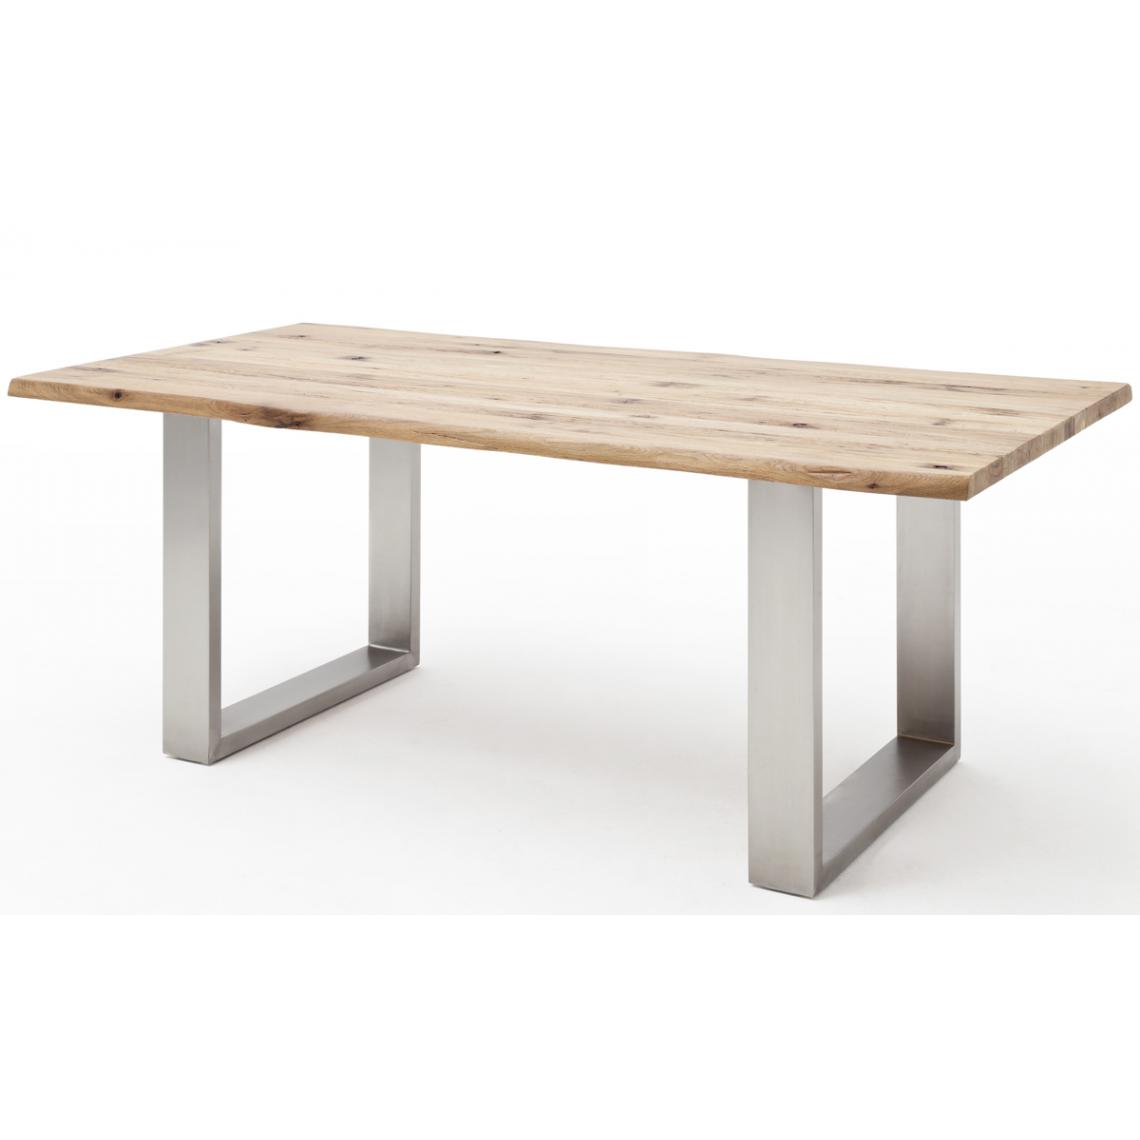 Pegane - Table à manger / table diner en chêne massif teinte chêne sauvage - L.180 x H.77 x P.100 cm -PEGANE- - Tables à manger